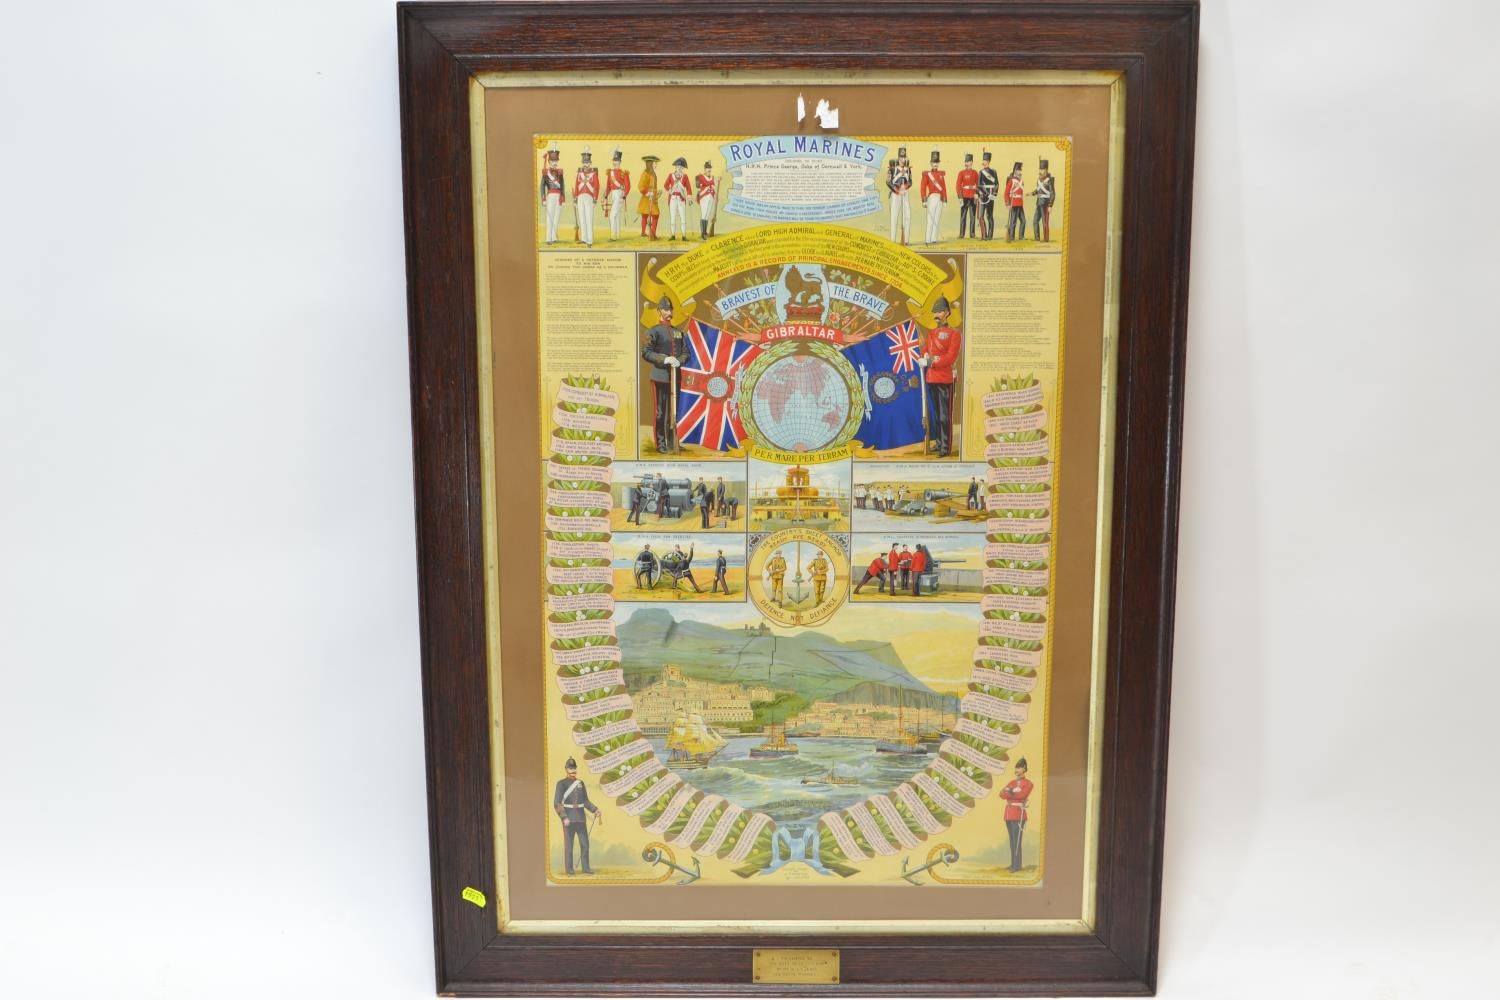 Vintage Royal Marines poster. Copyright design by J Thornton. With presentation plaque on frame. 'Pr